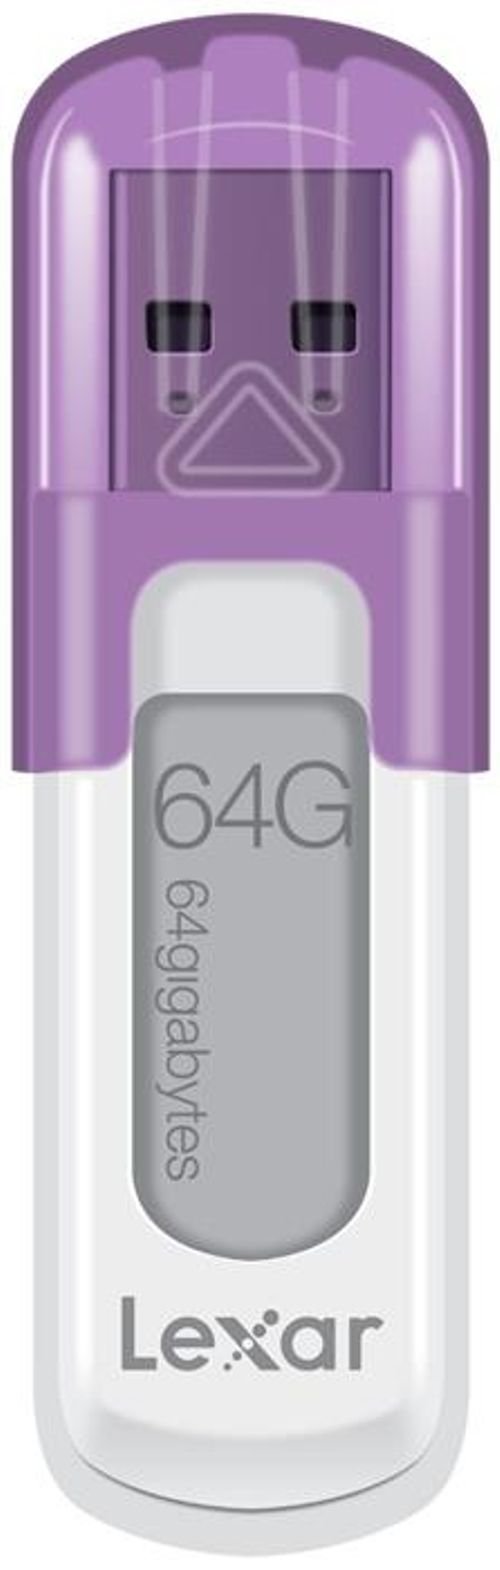 Lexar JumpDrive V10 USB Flash Drive - Purple color - CB325HE